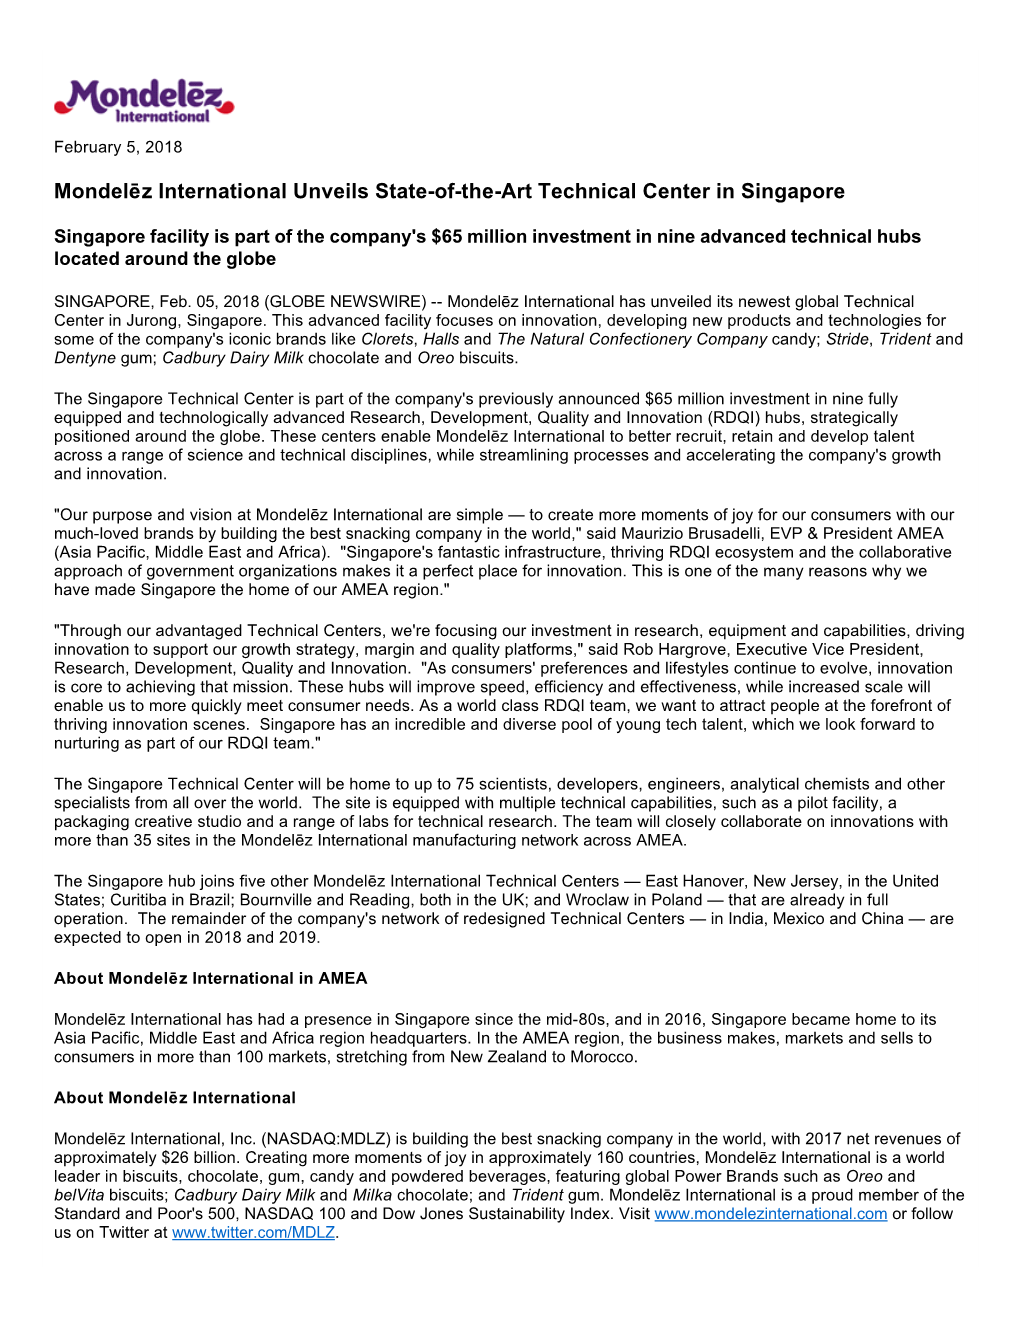 Mondelēz International Unveils State-Of-The-Art Technical Center in Singapore